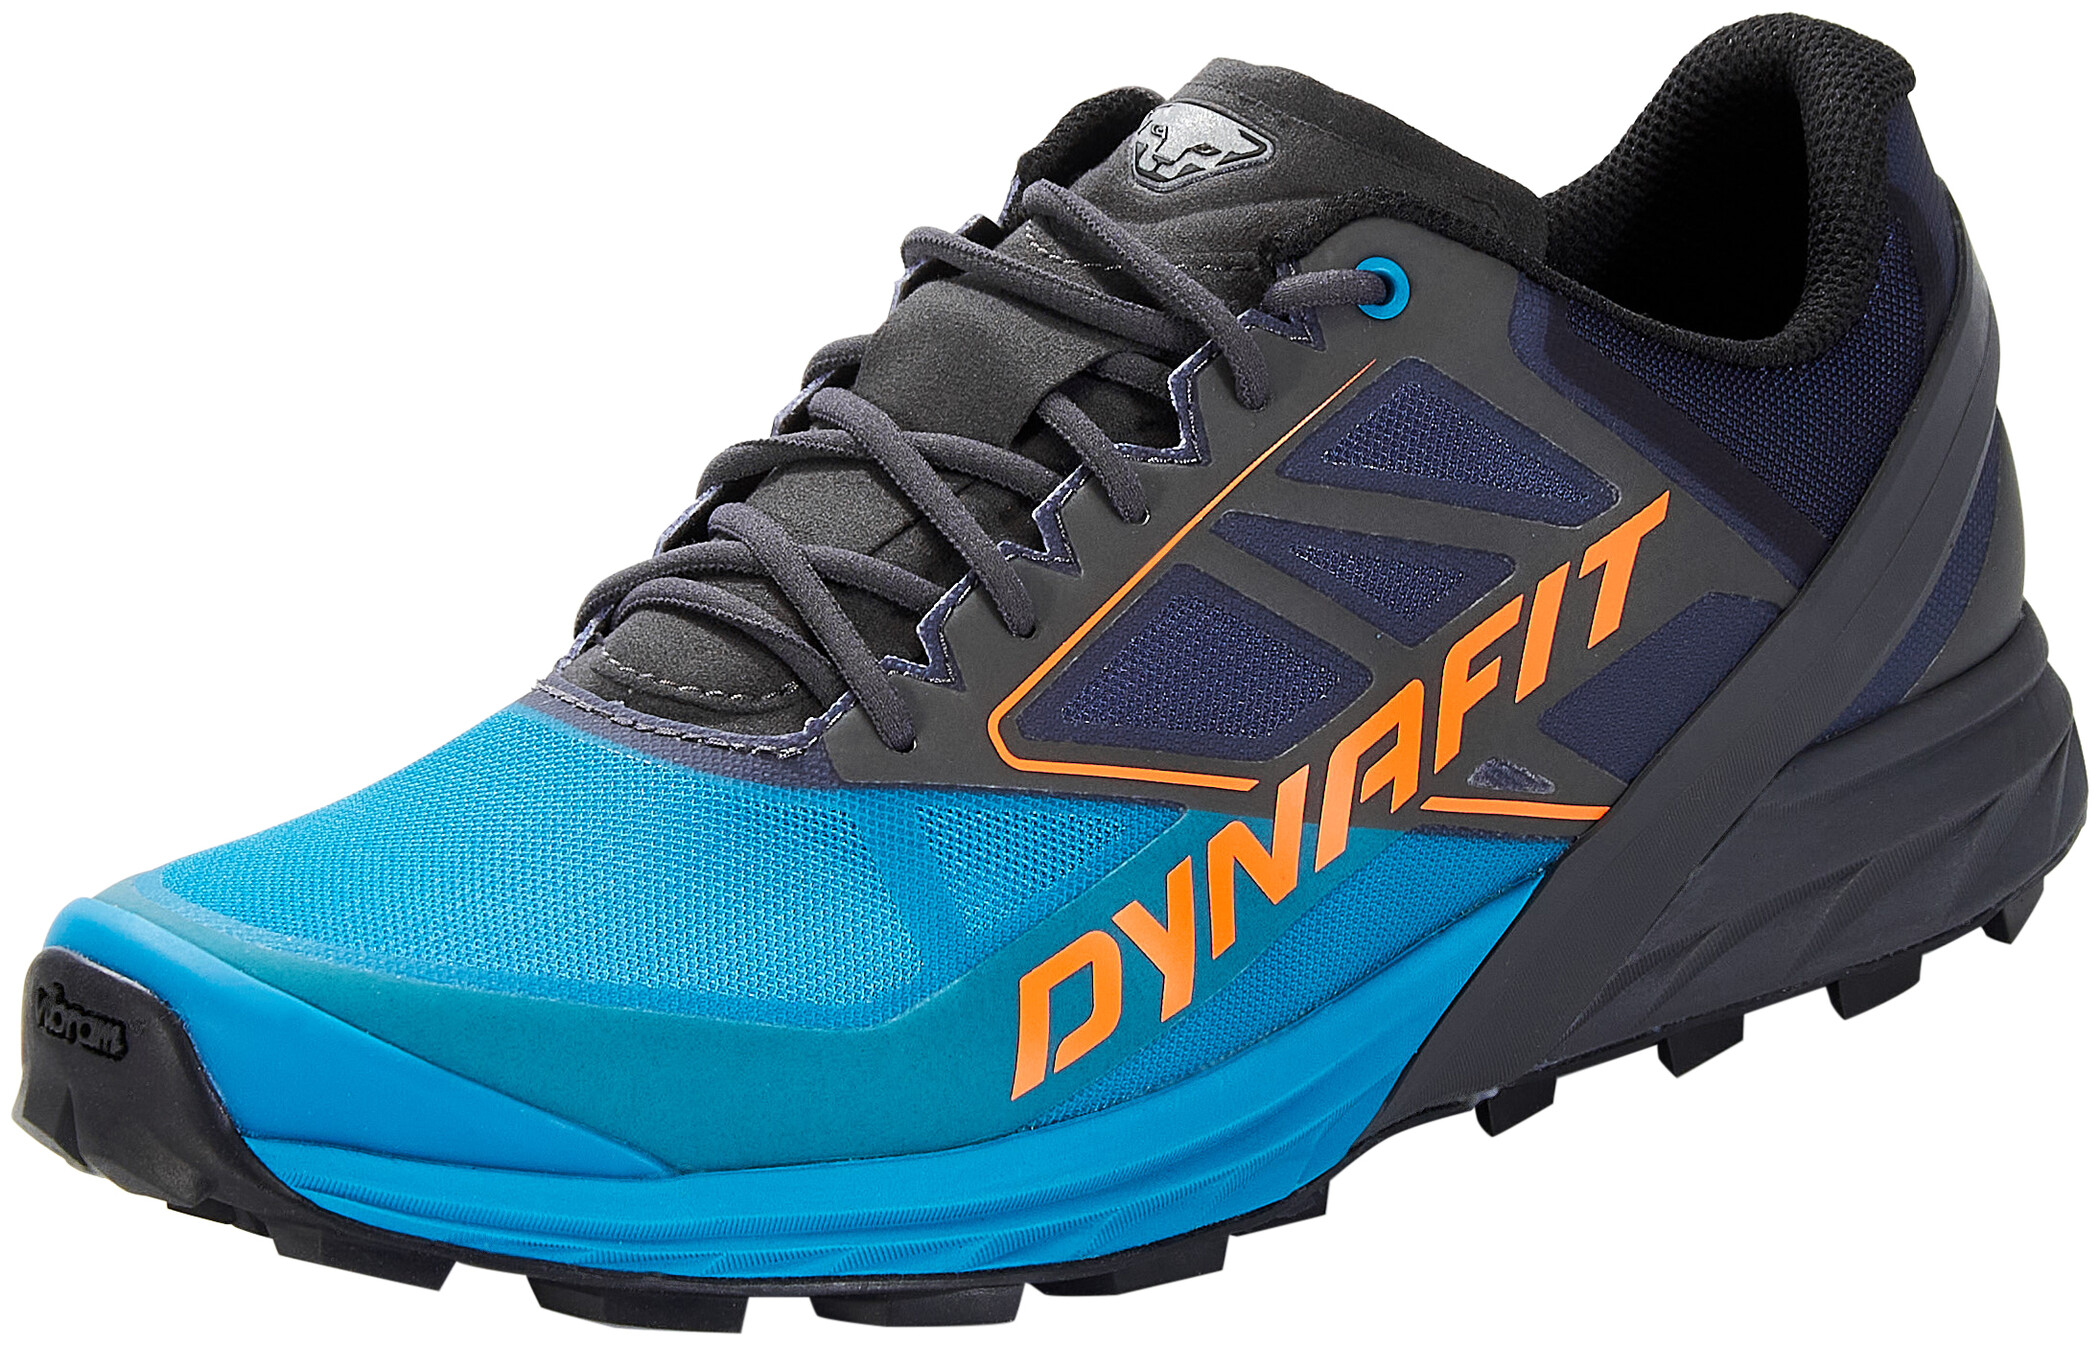 Dynafit Alpine Schuhe Herren grau/blau